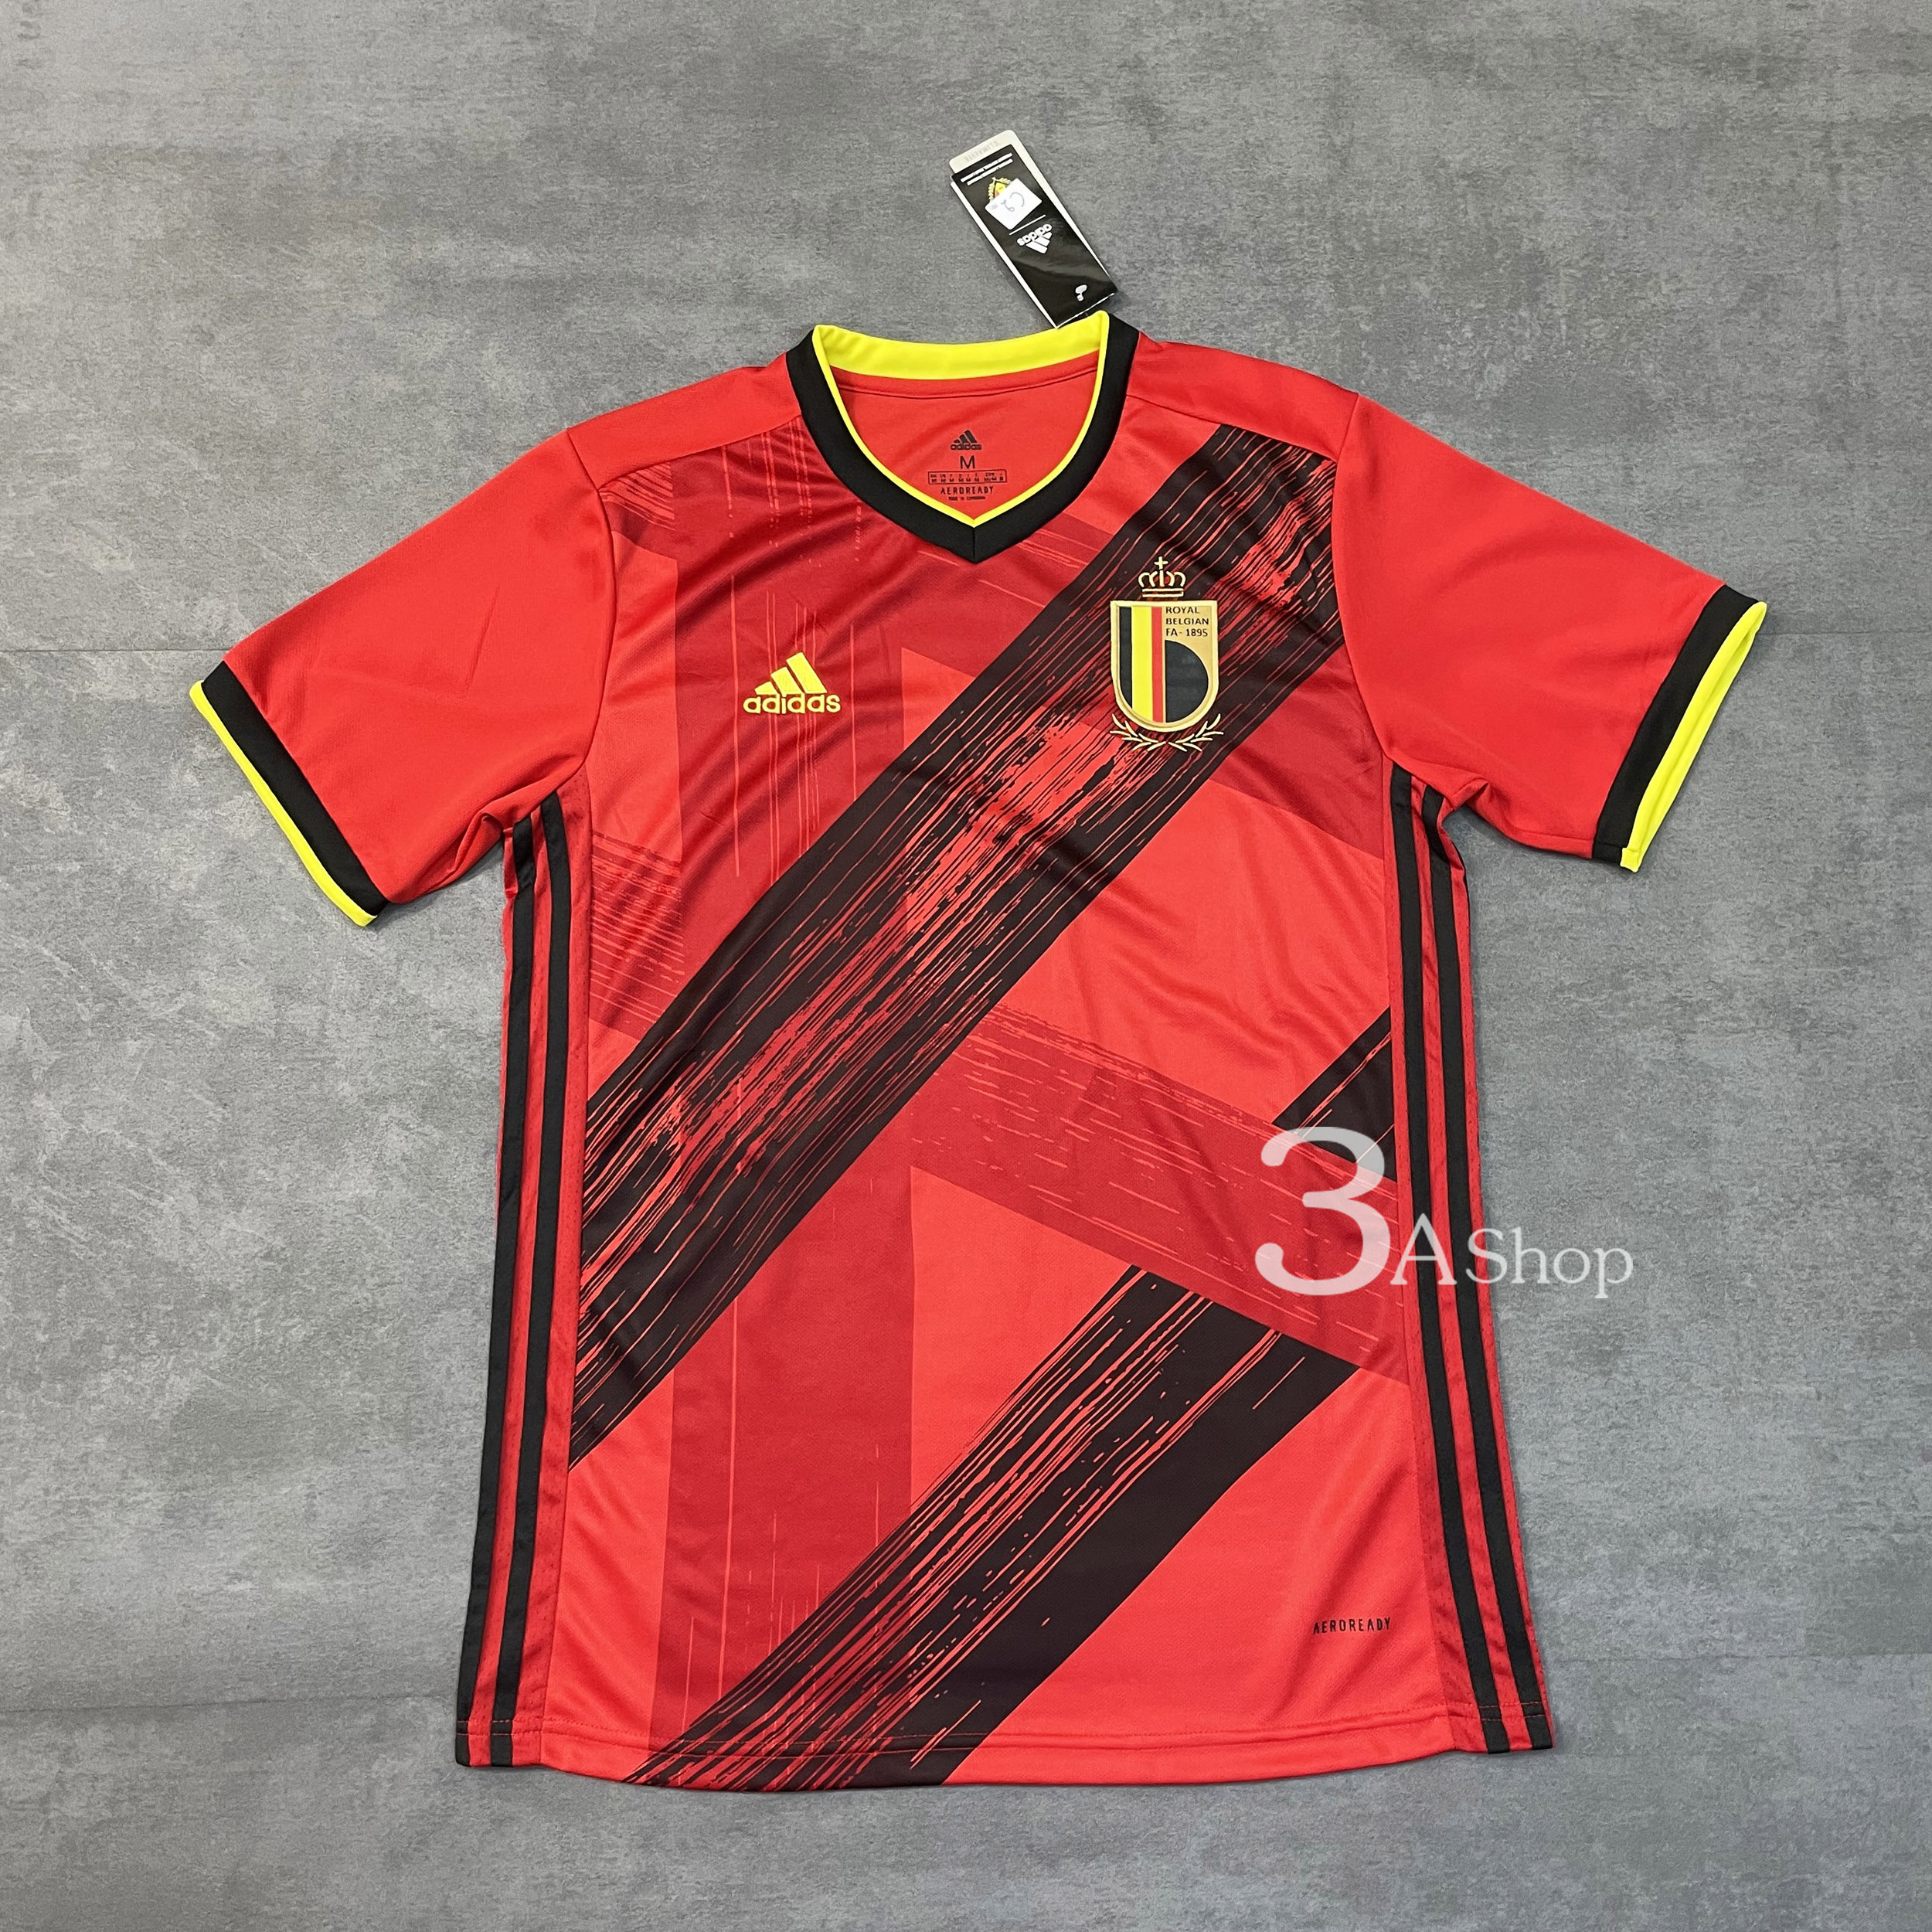 Belgium Home 20/21 Red FOOTBALL SHIRT SOCCER JERSEY เสื้อบอล เสื้อฟุตบอลชาย เสื้อบอลชาย เสื้อฟุตบอล เสื้อกีฬาชาย2021 เสื้อทีมเบลเยี่ยม ปี21 เกรด 3A